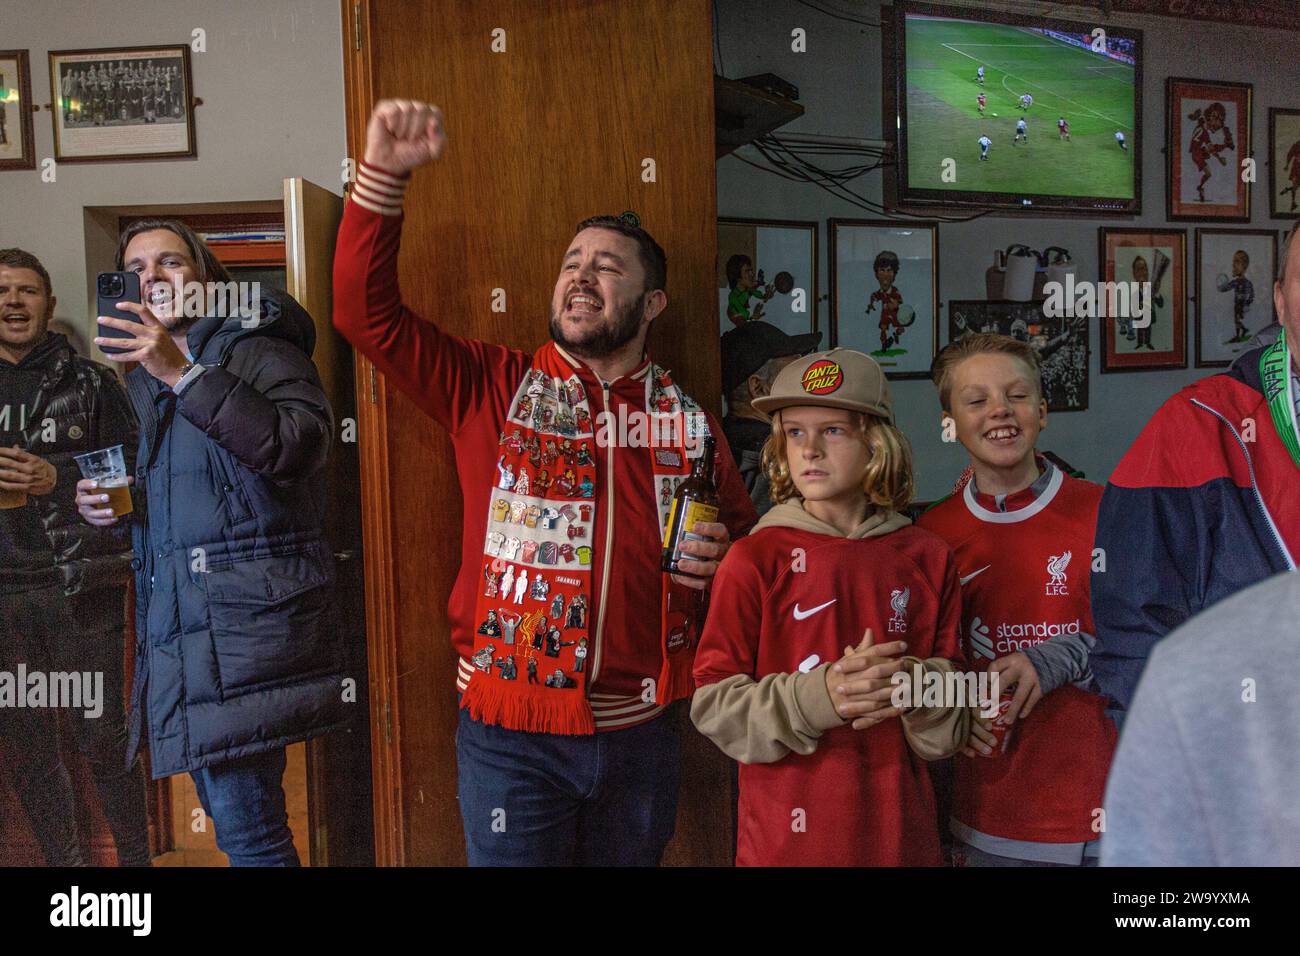 Football fans inside The Albert pub Anfield Liverpool England Stock Photo